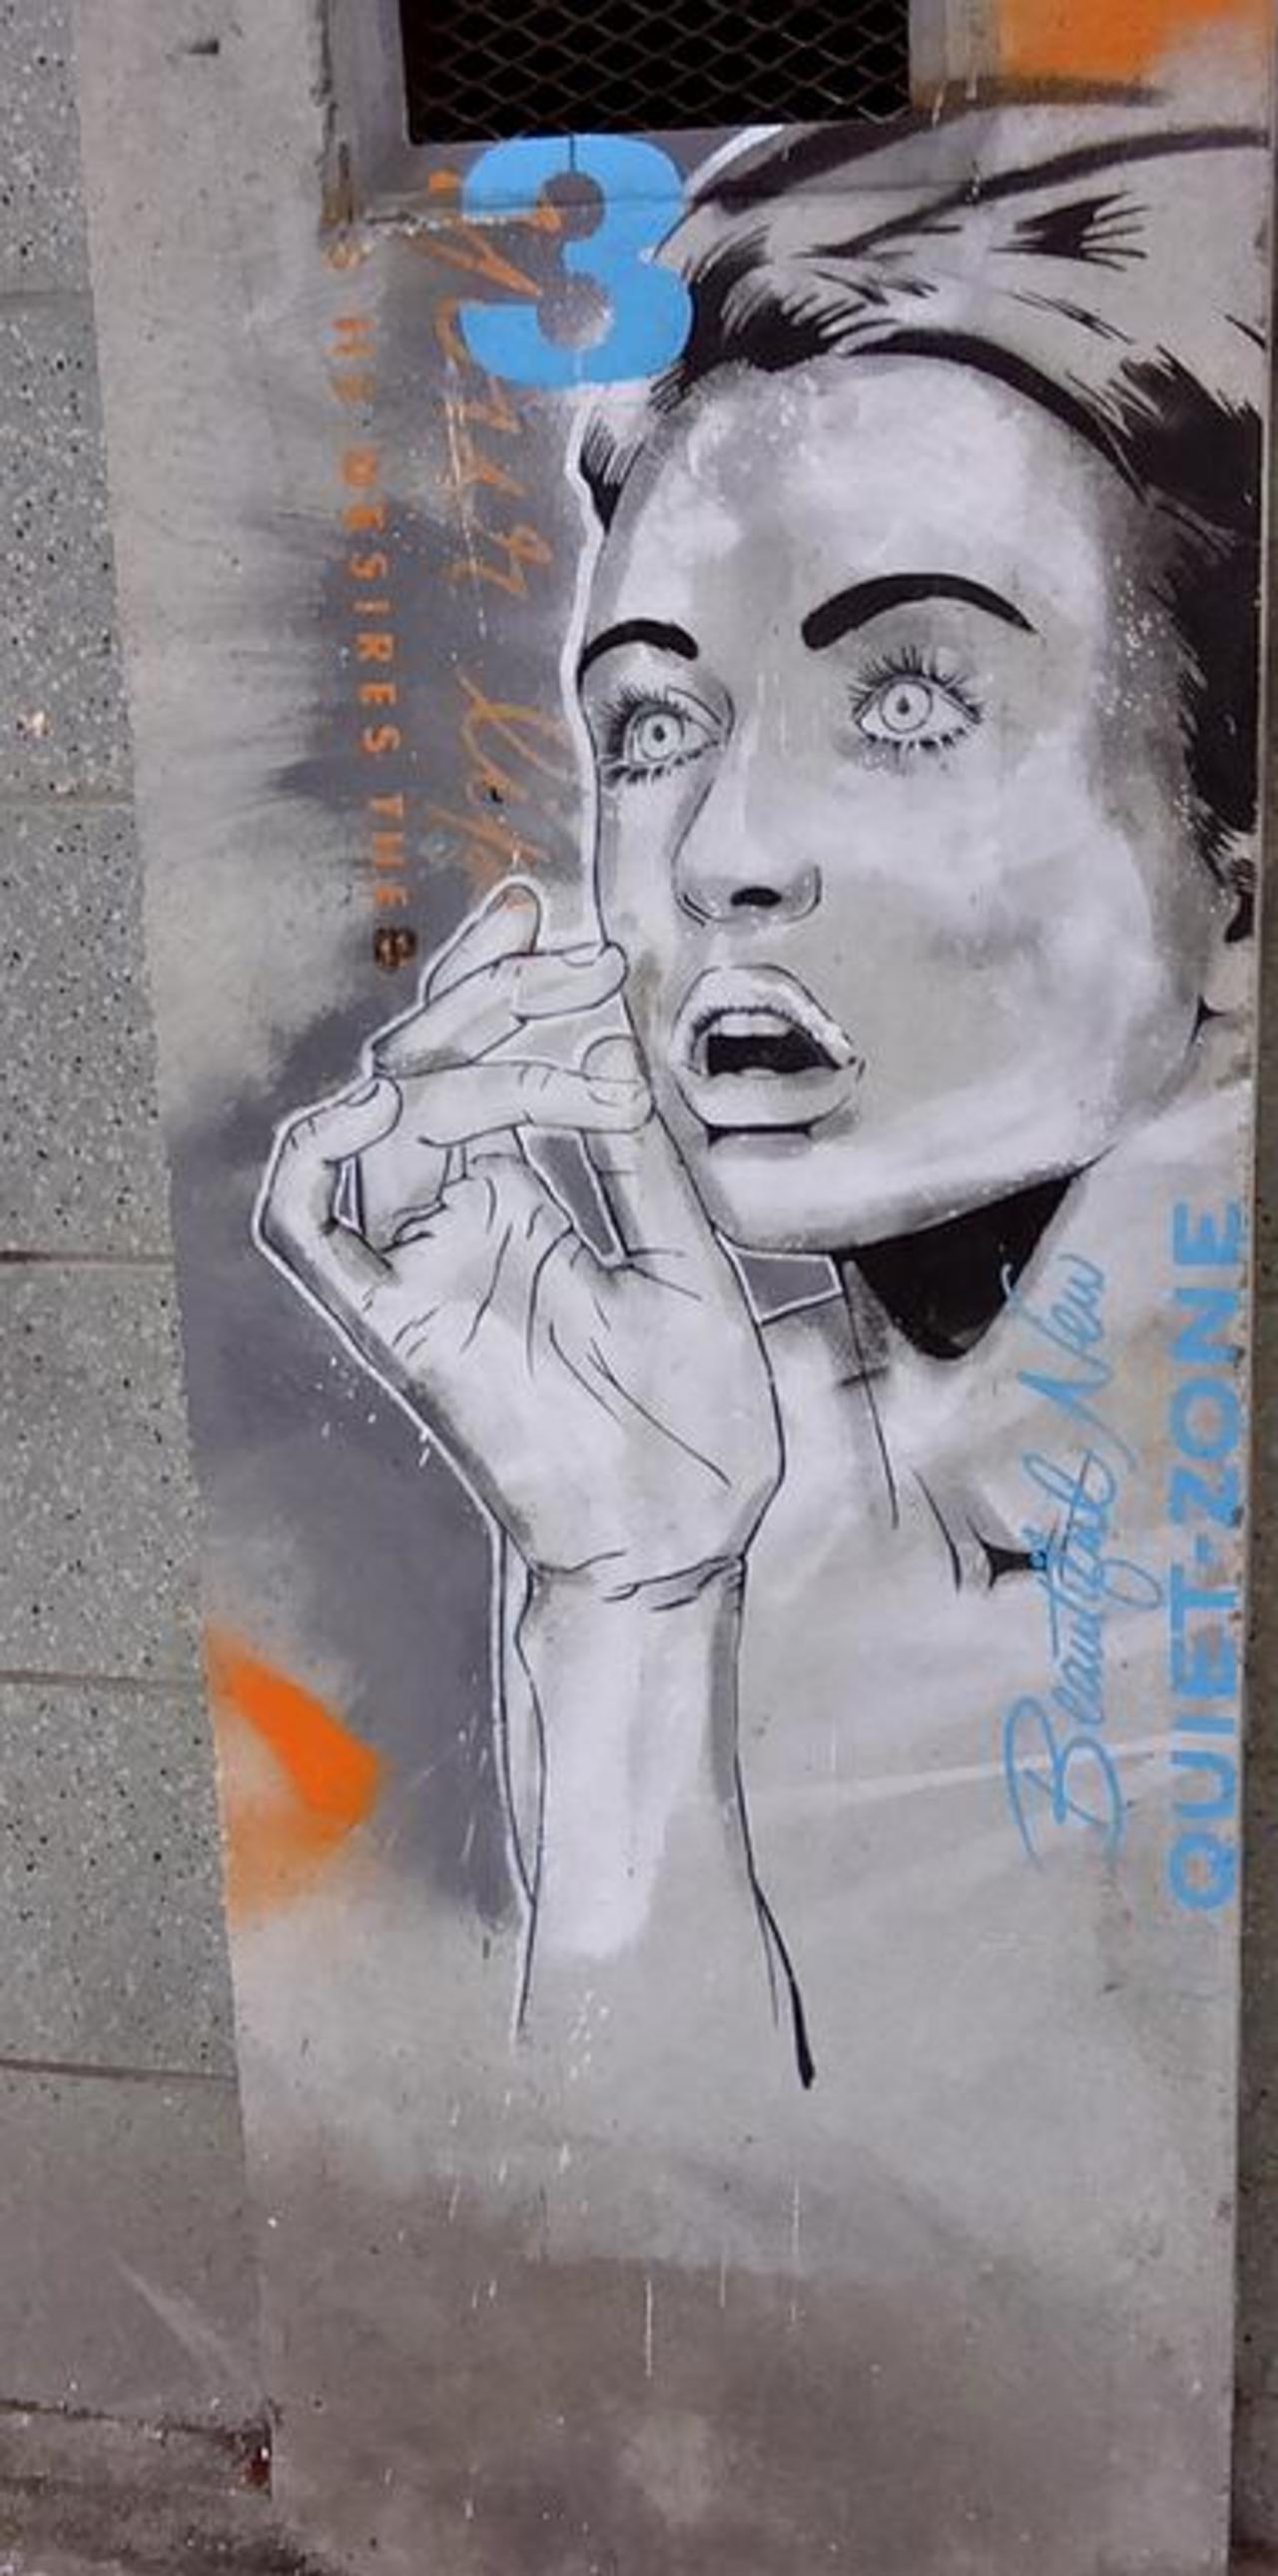 Street Art by anonymous in #Vitry-sur-Seine http://www.urbacolors.com #art #mural #graffiti #streetart https://t.co/1j98xrGH8E